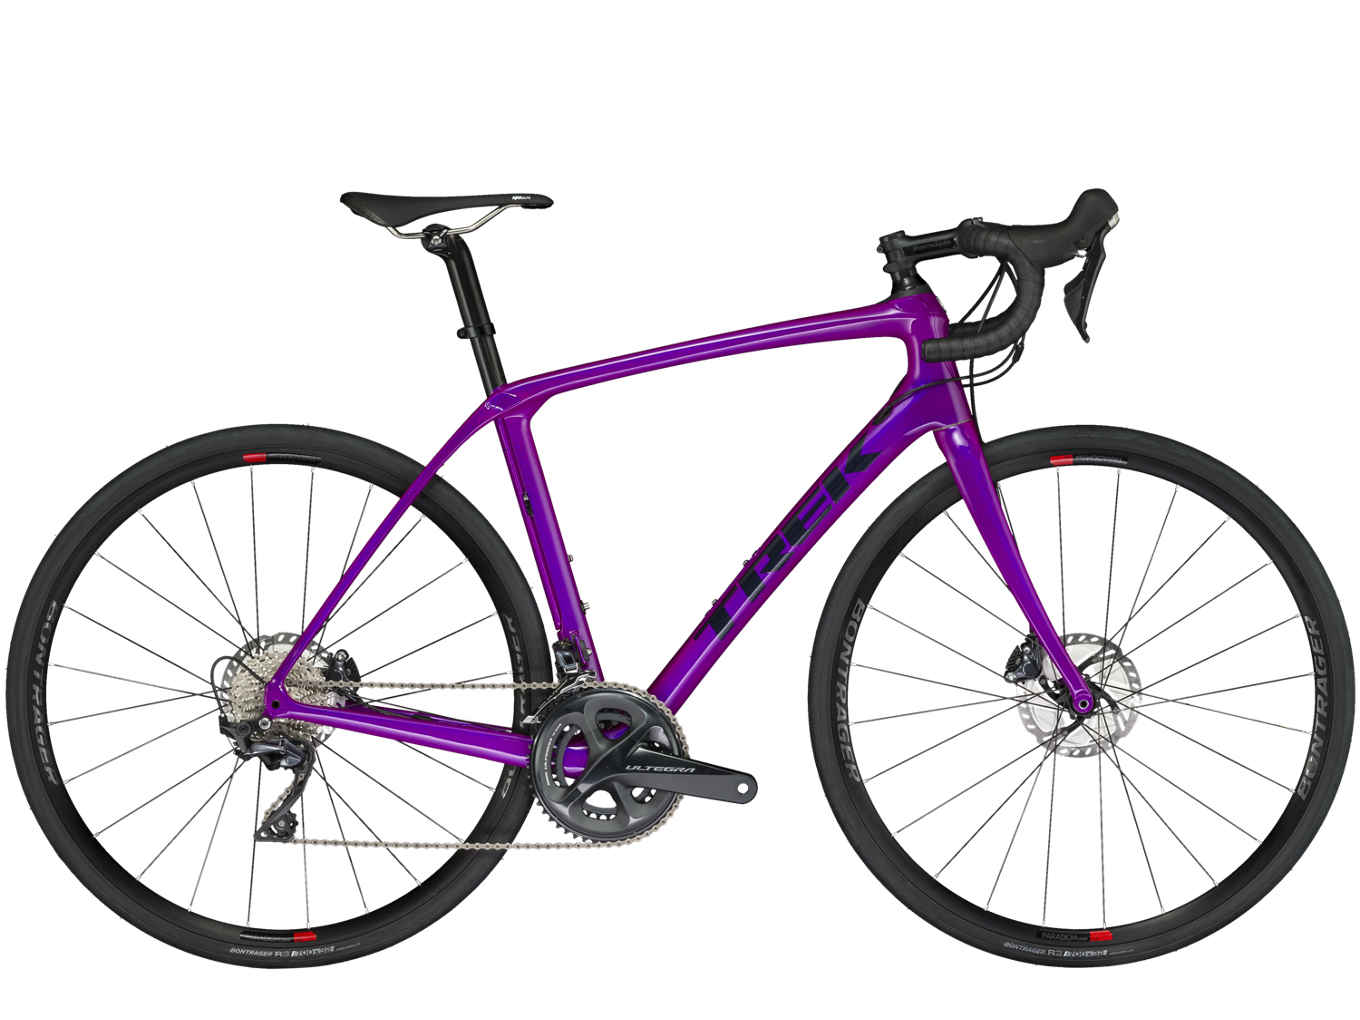 Trek adds Domane Women's models, bikes get WSD touchpoints but same geometry